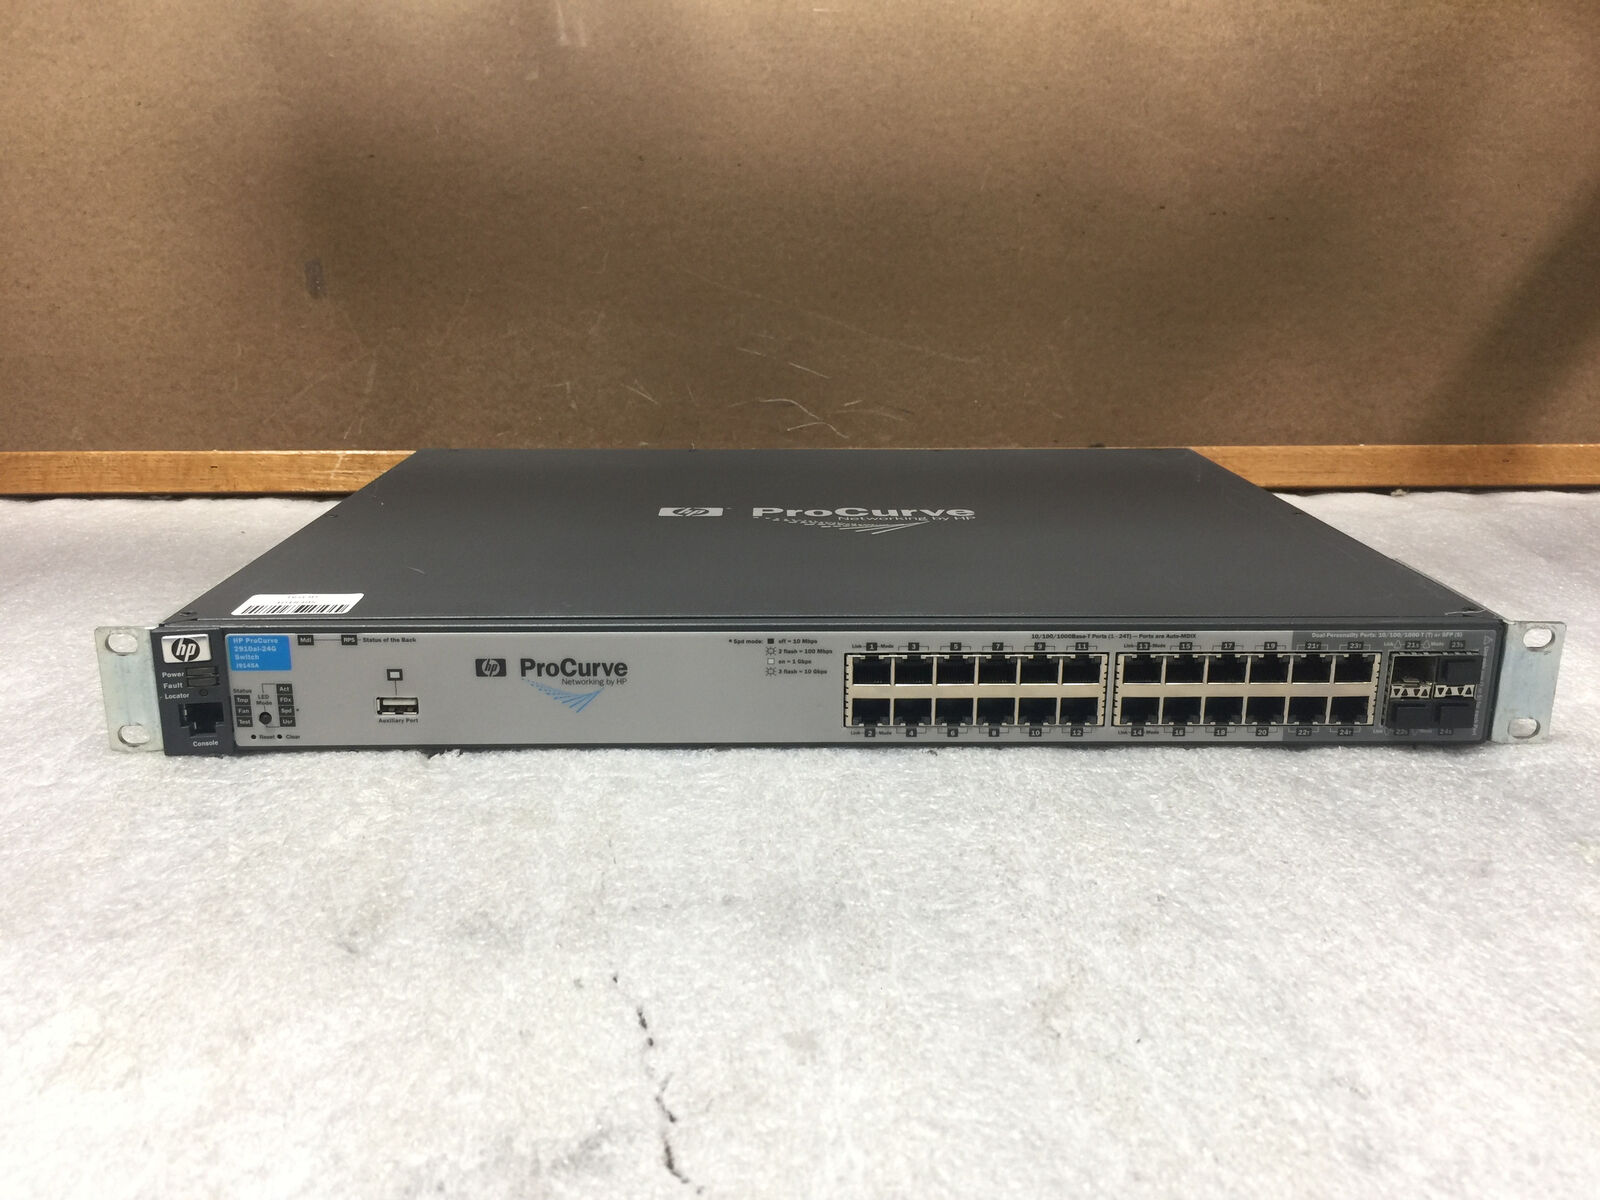 HP ProCurve 2910al-24G - J9145A 24 Port Gigabit Ethernet Switch, with Rack Ears